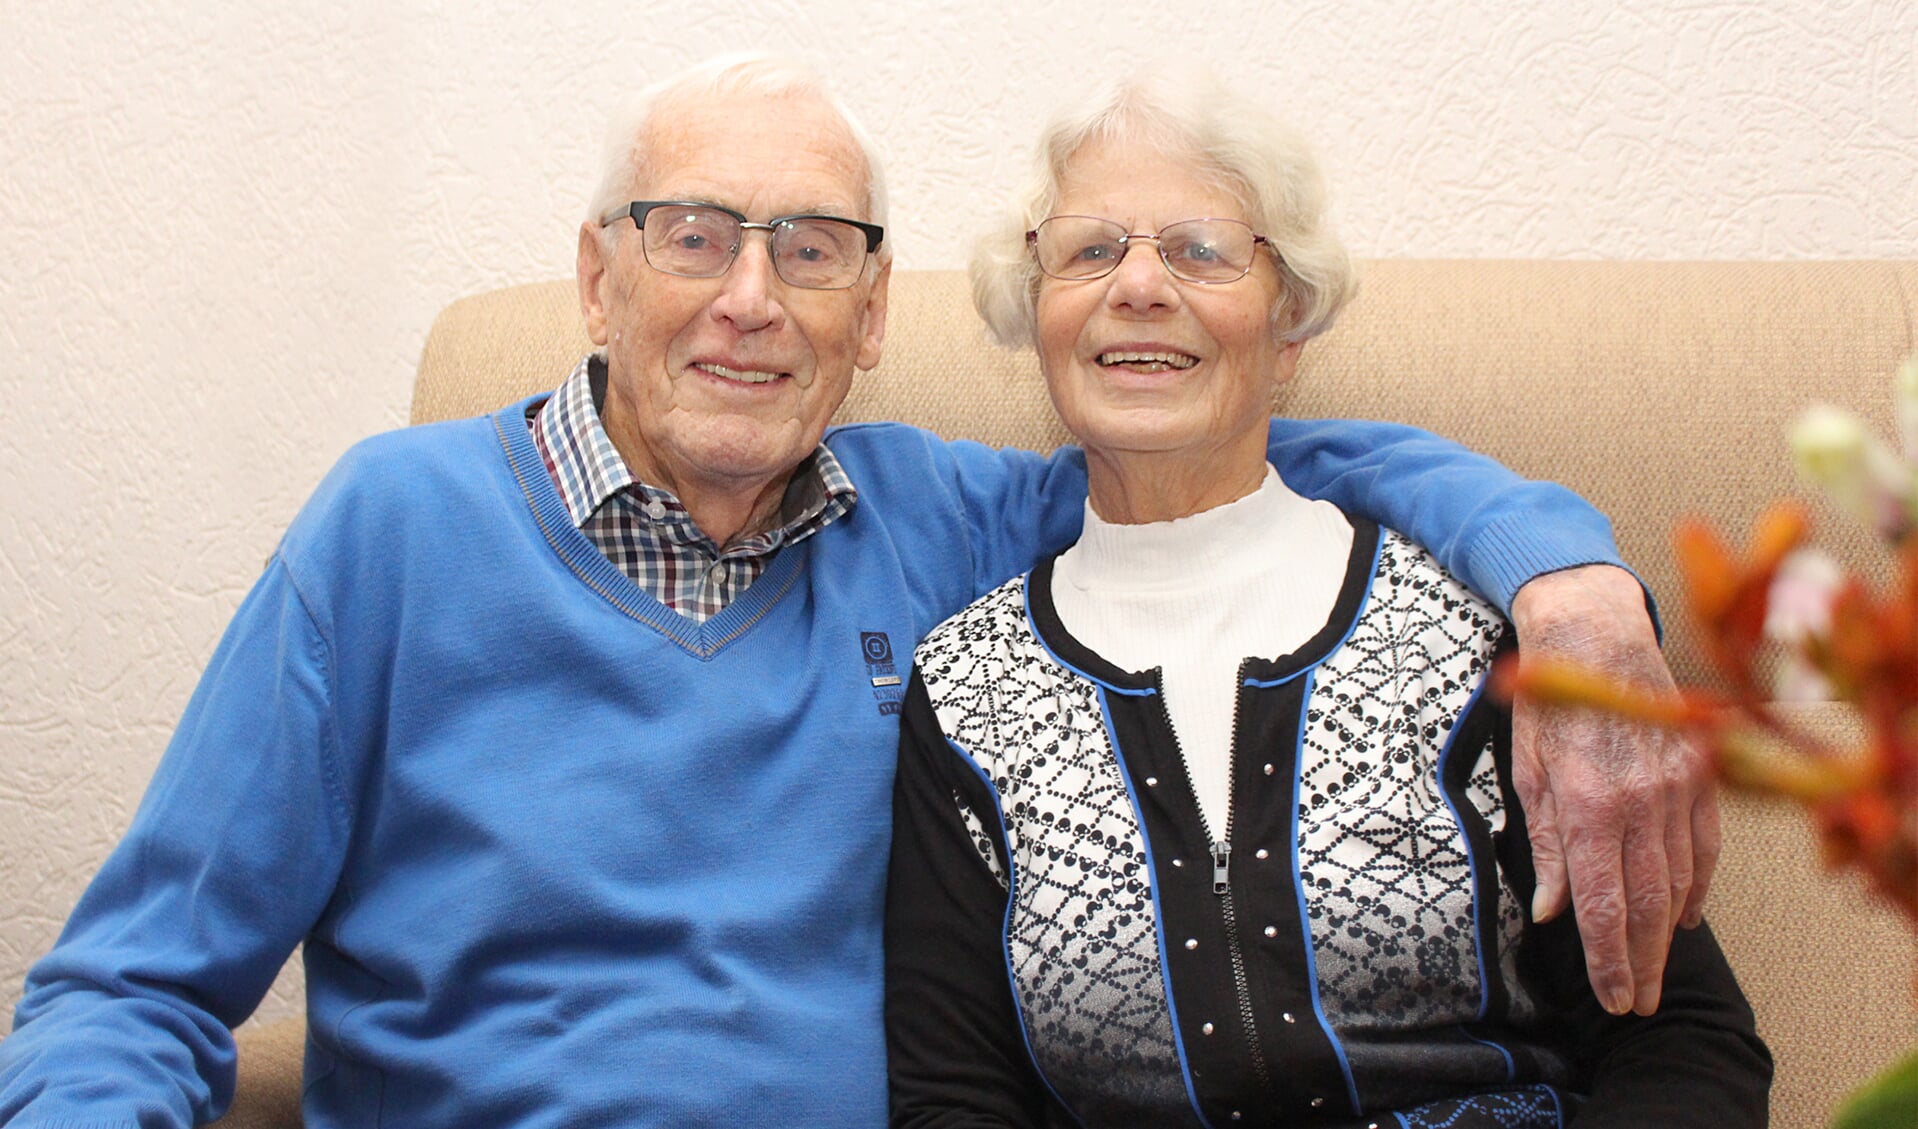 Toon en Lies van Iersel-Tak vierden op 9 januari hun 60-jarige bruiloft. FOTO ELS ROMMERS